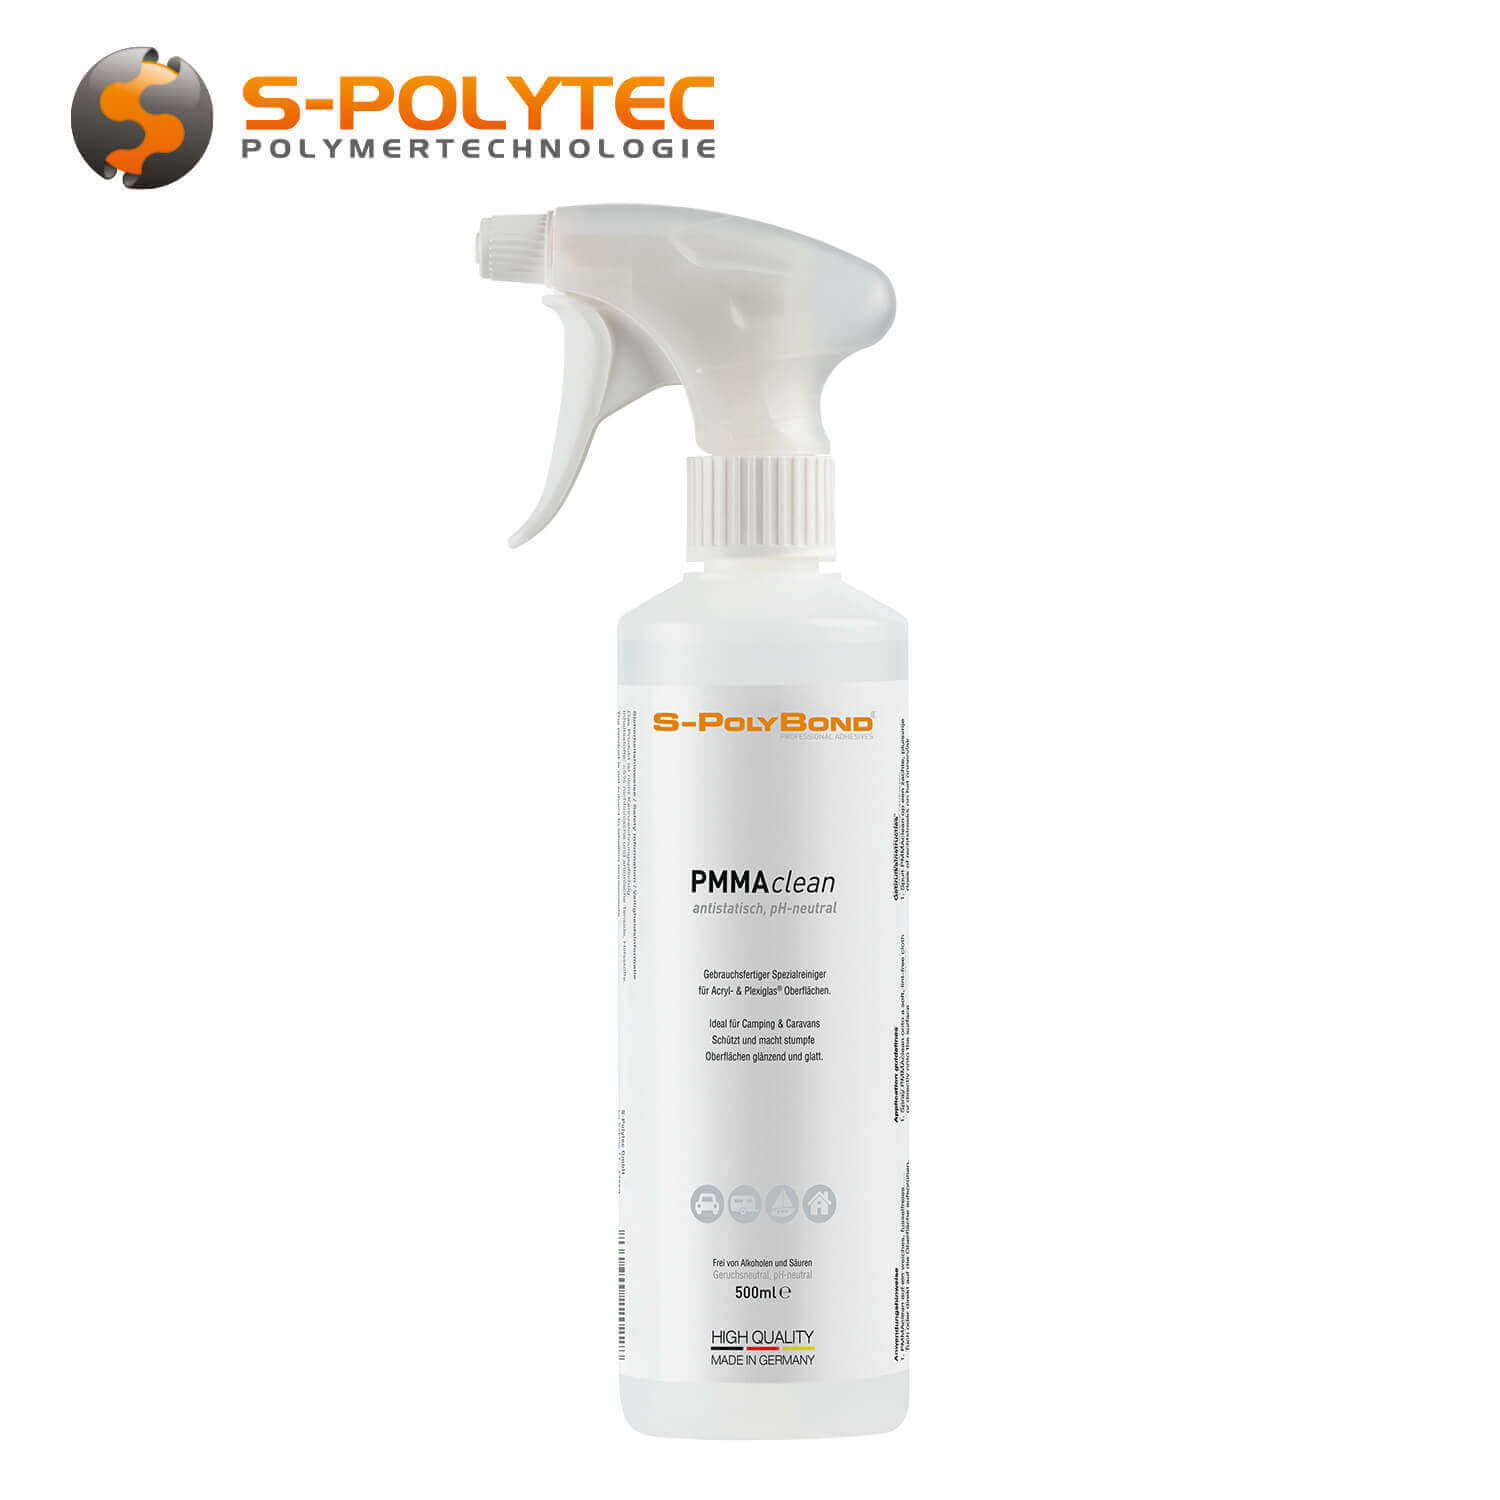 S-Polybond PMMAclean - speciale reiniger voor acryl en plexiglas® in de herbruikbare 500ml sprayflacon